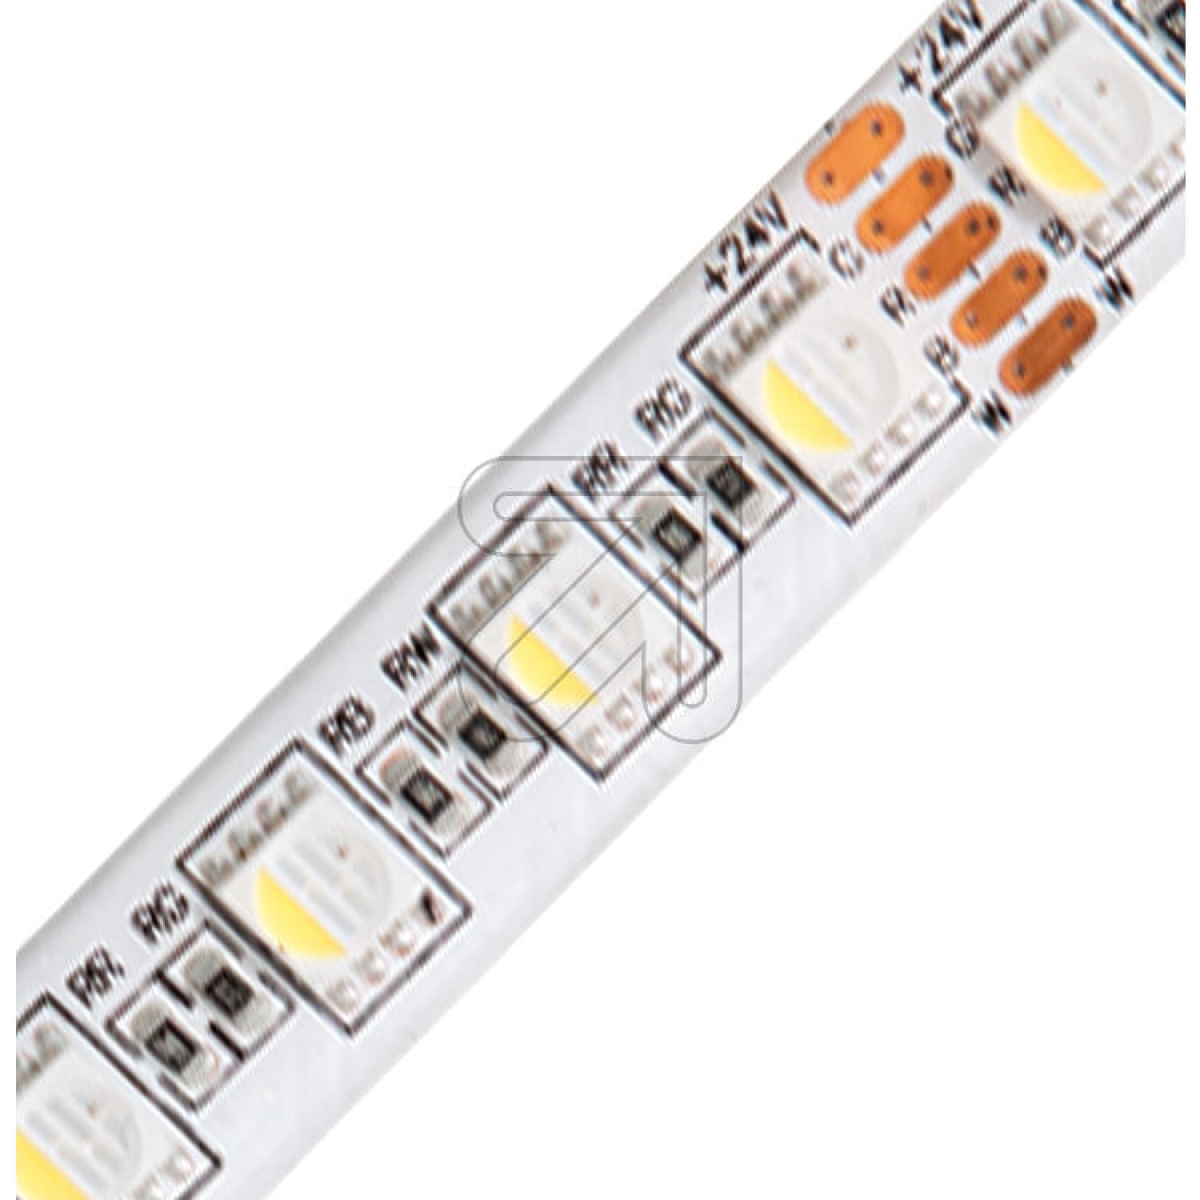 EVNRGB+W-LED Strips IP54 24VA/DC LSTRSB 54244205099-02Artikel-Nr: 687430